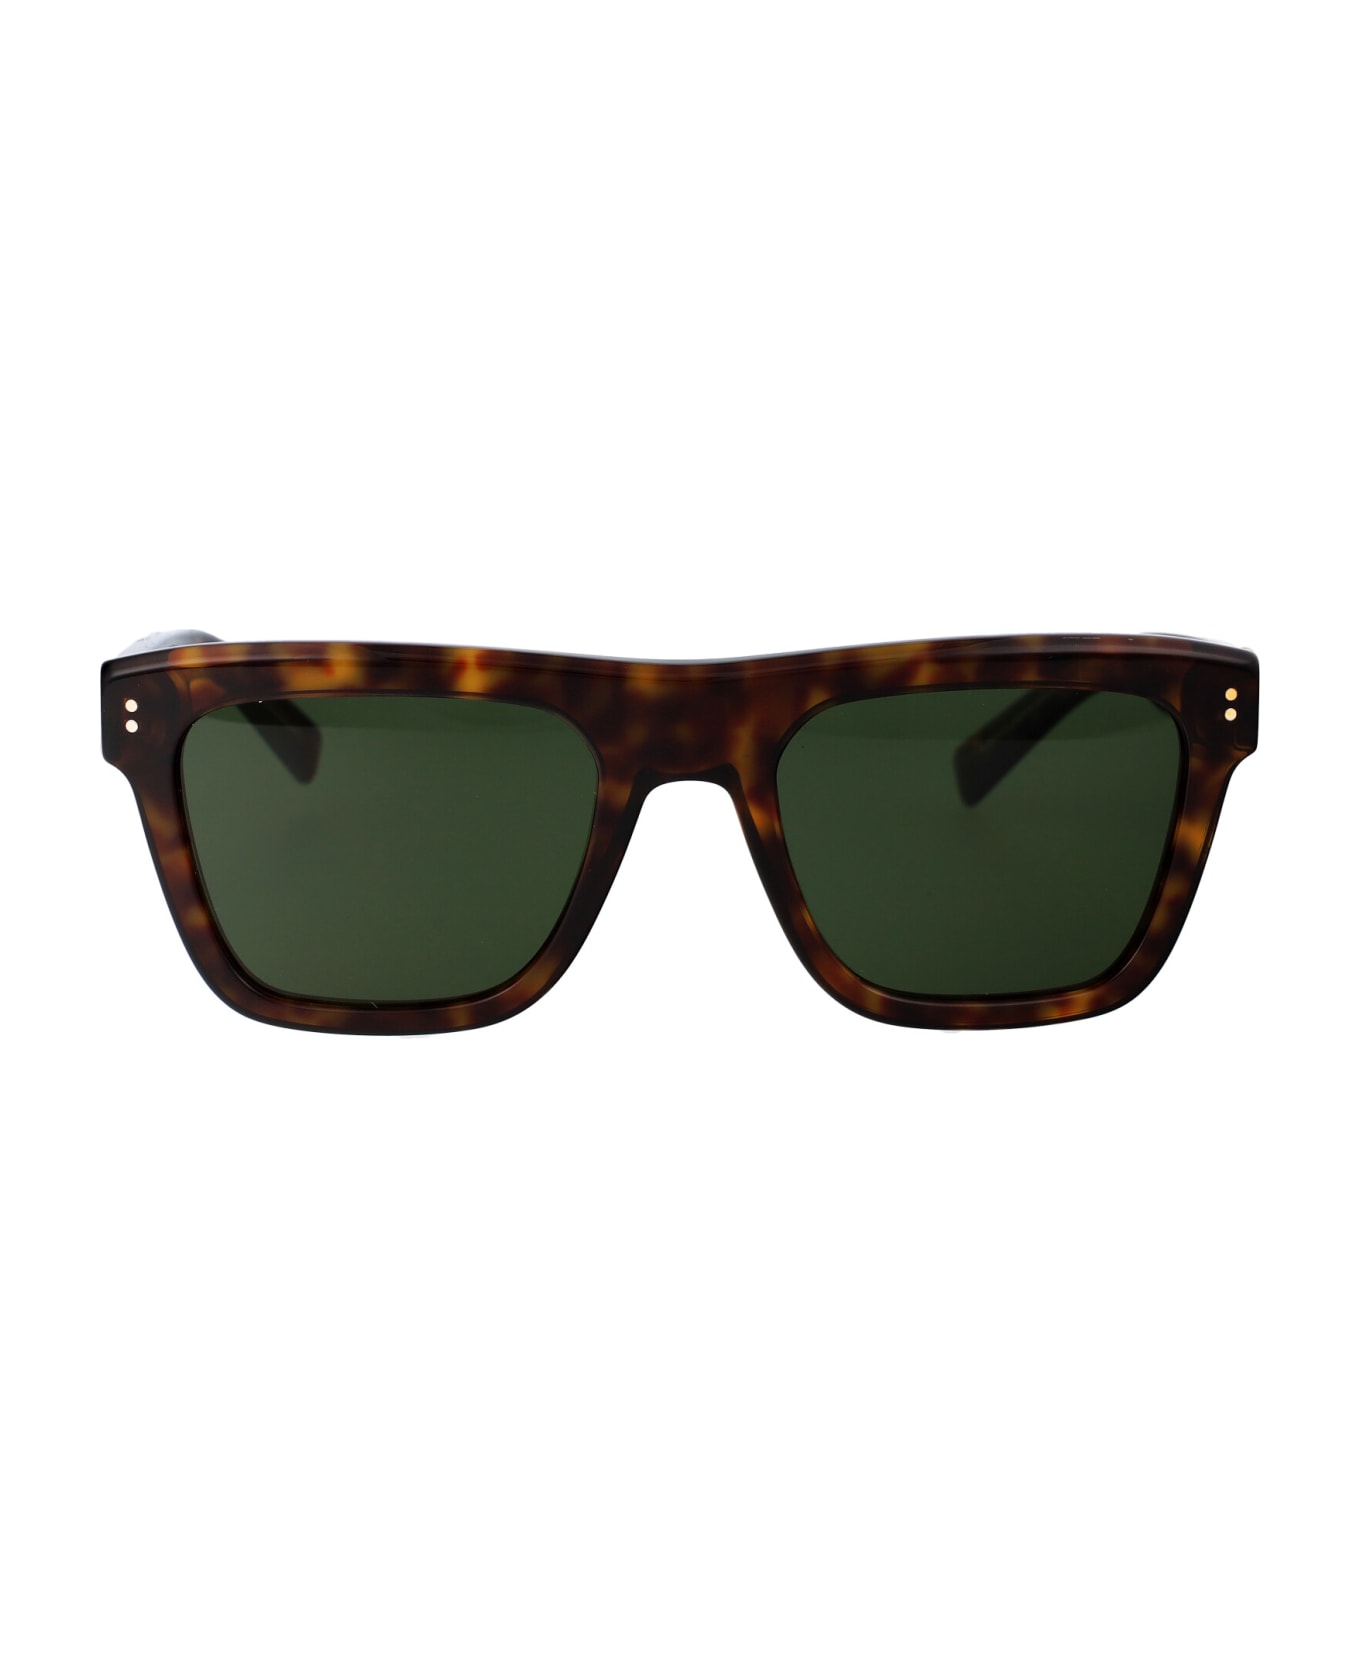 Dolce & Gabbana Eyewear 0dg4413 Sunglasses - 675/R5 Black/Crystal サングラス